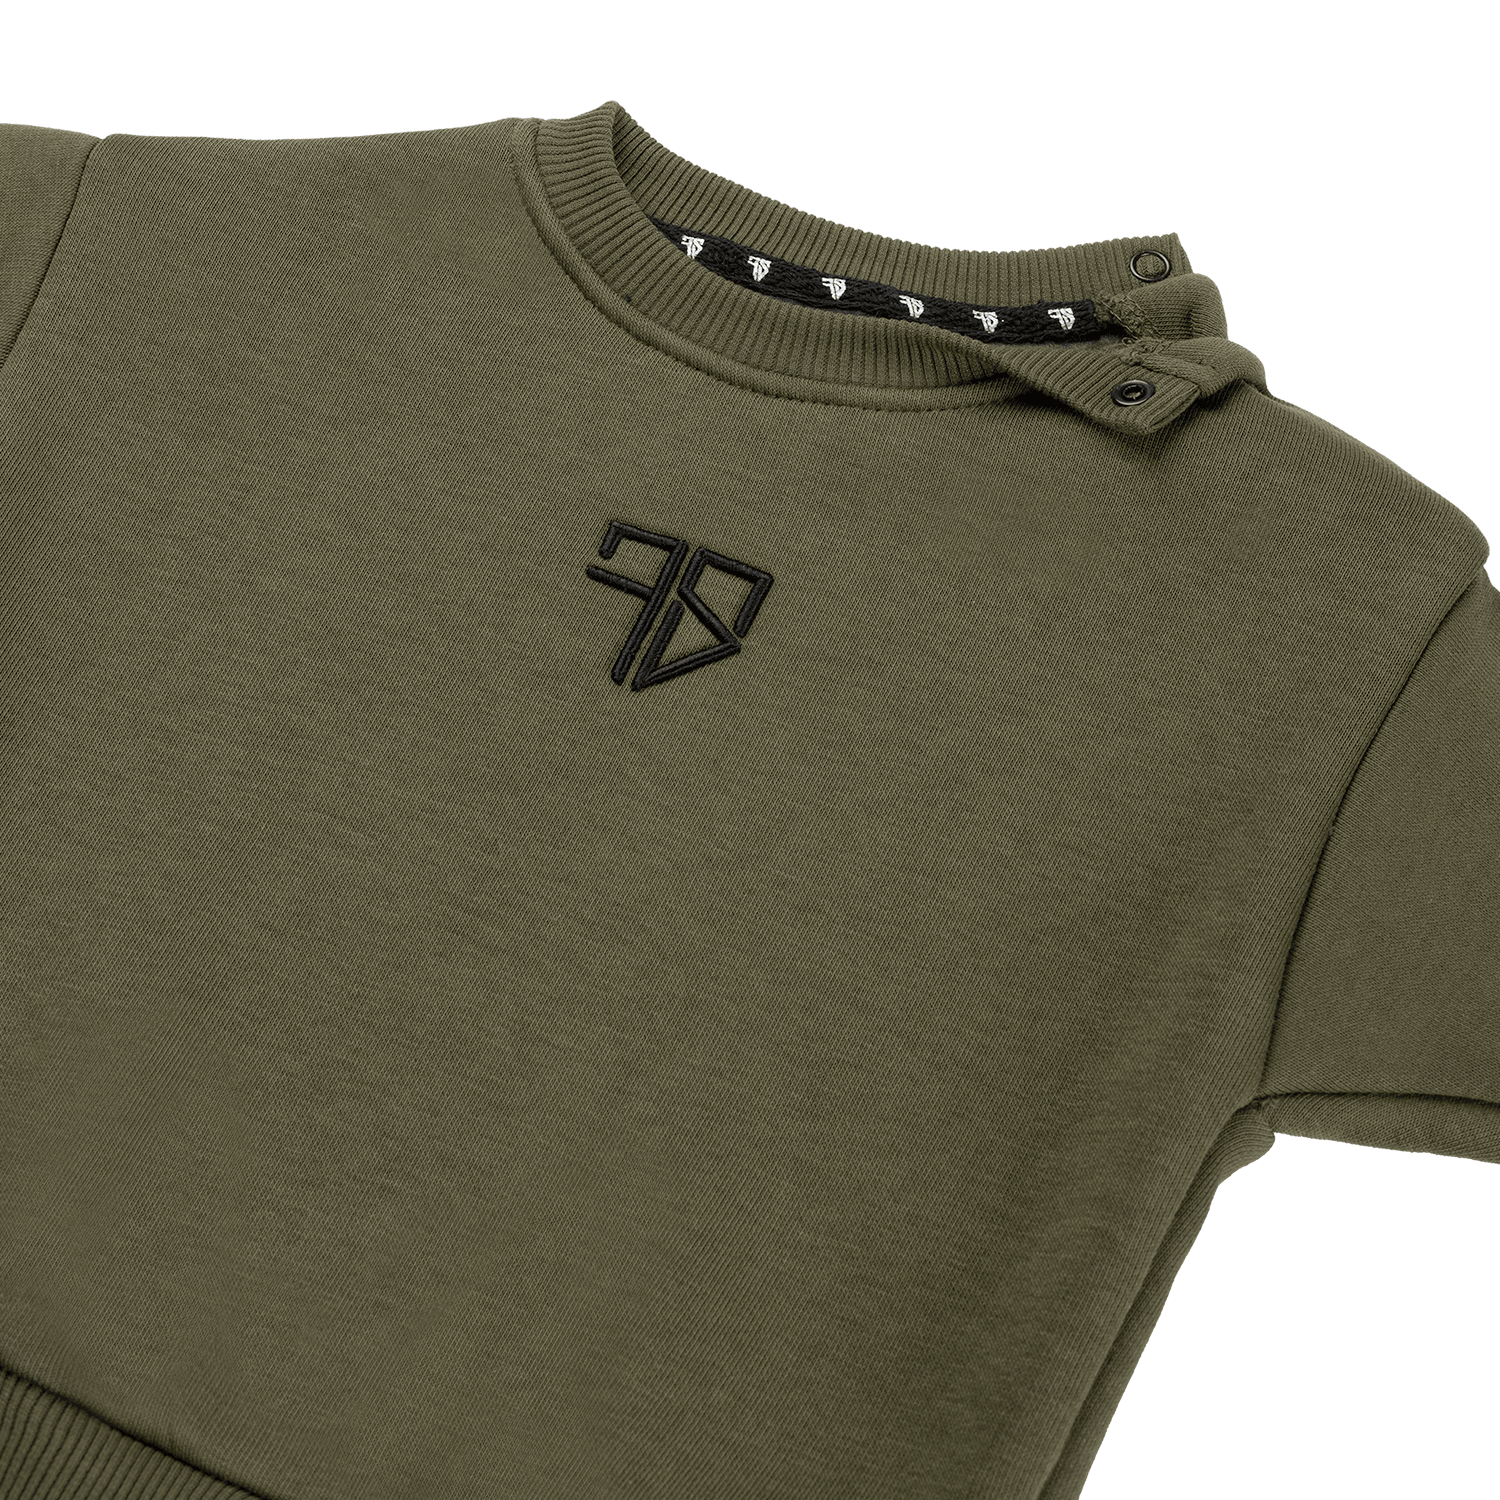 NEVIO Tracksuit | army groen - BABY - Frenky S -Vader en zoon kleding